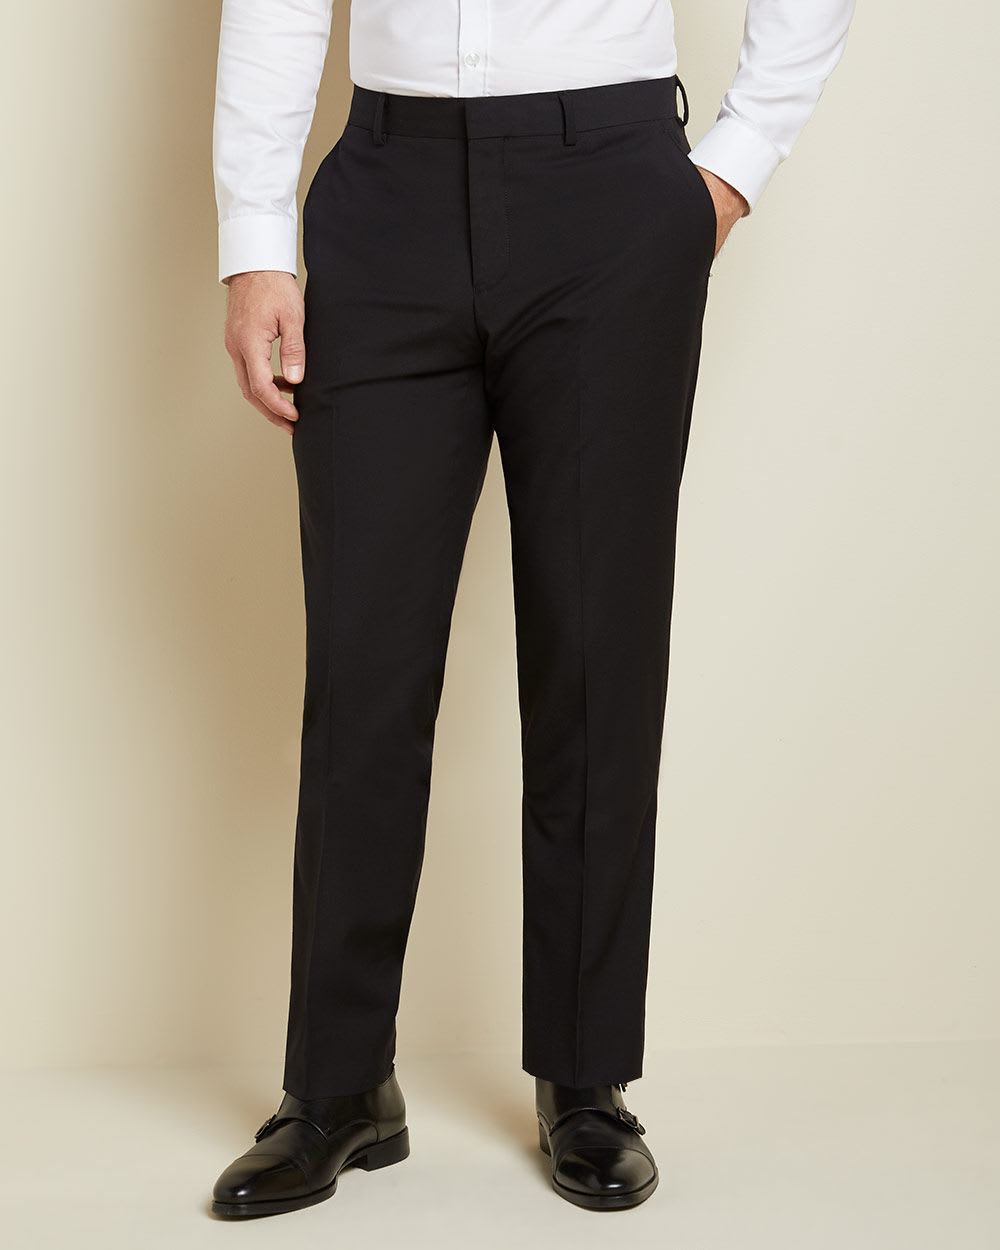 Essential Athletic Fit black wool-blend suit Pant